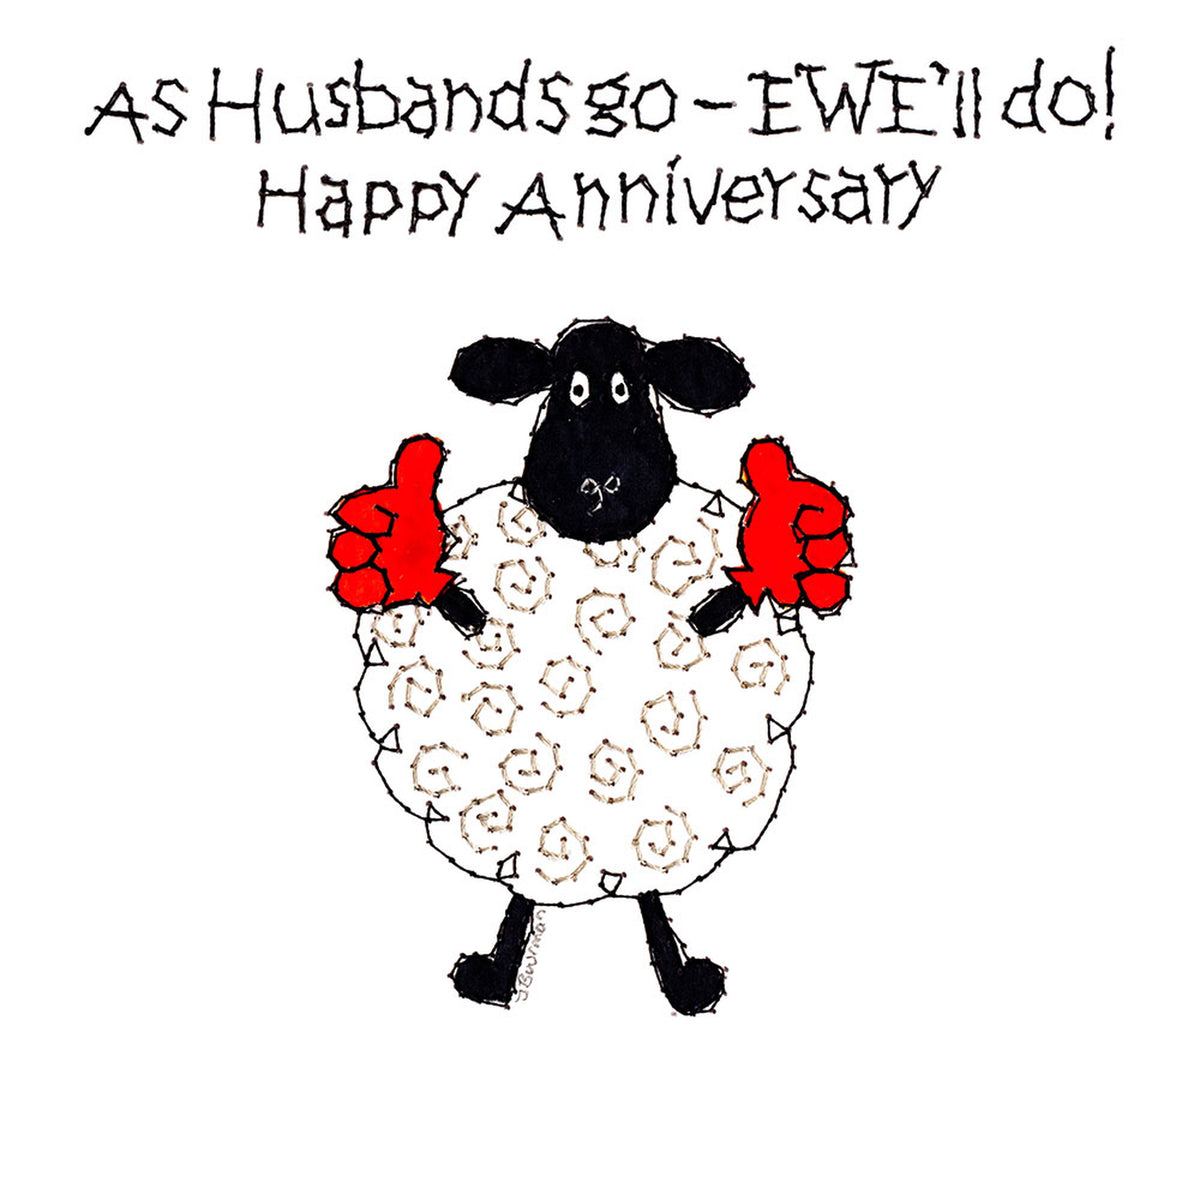 Ewe&#39;ll Do Husband Anniversary Card from Penny Black